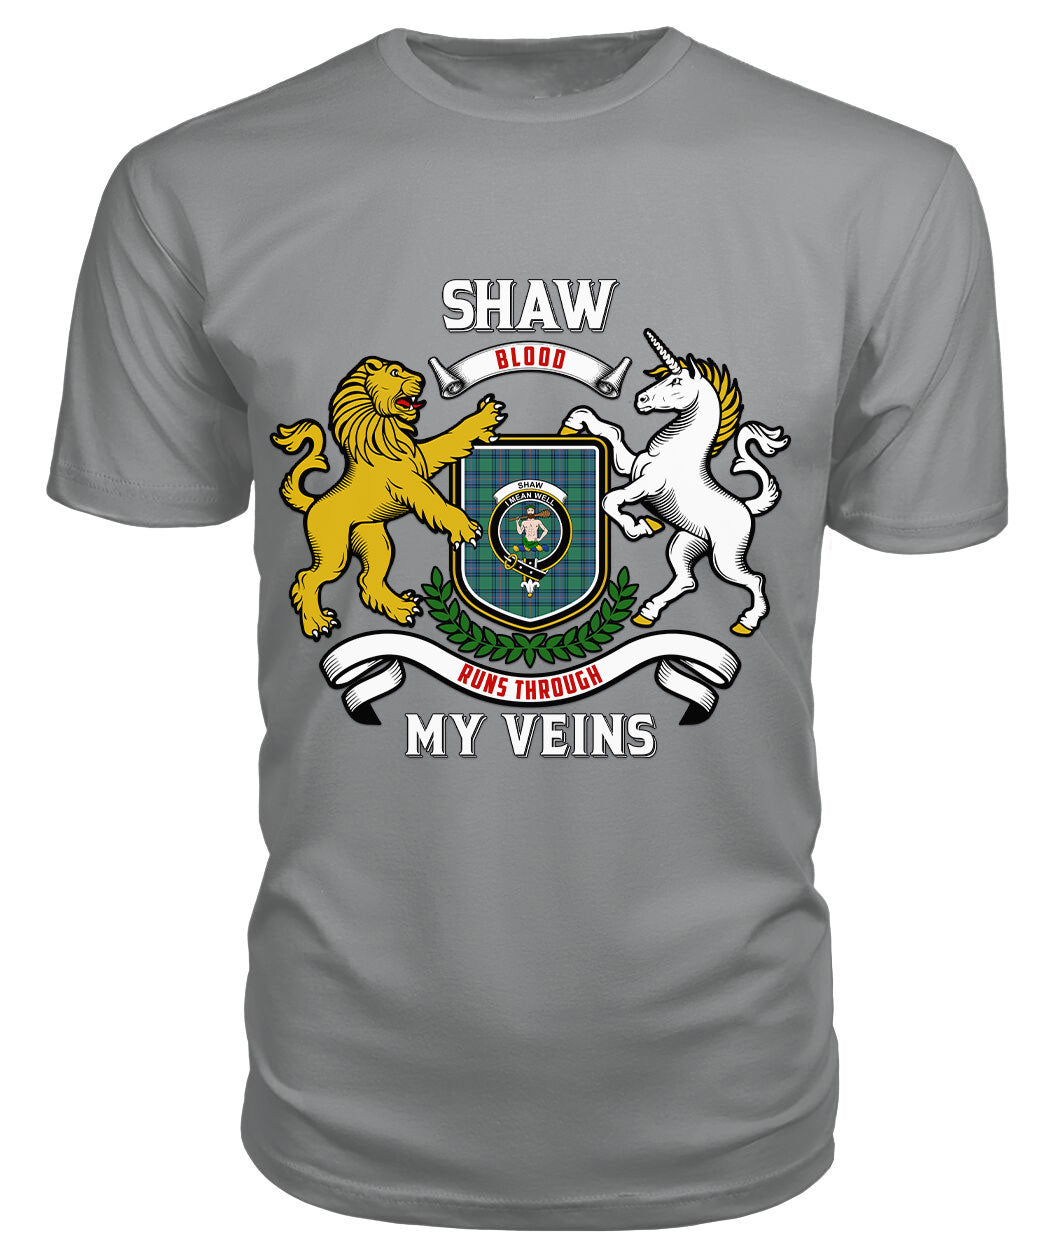 Shaw (of Sauchie) Tartan Crest 2D T-shirt - Blood Runs Through My Veins Style